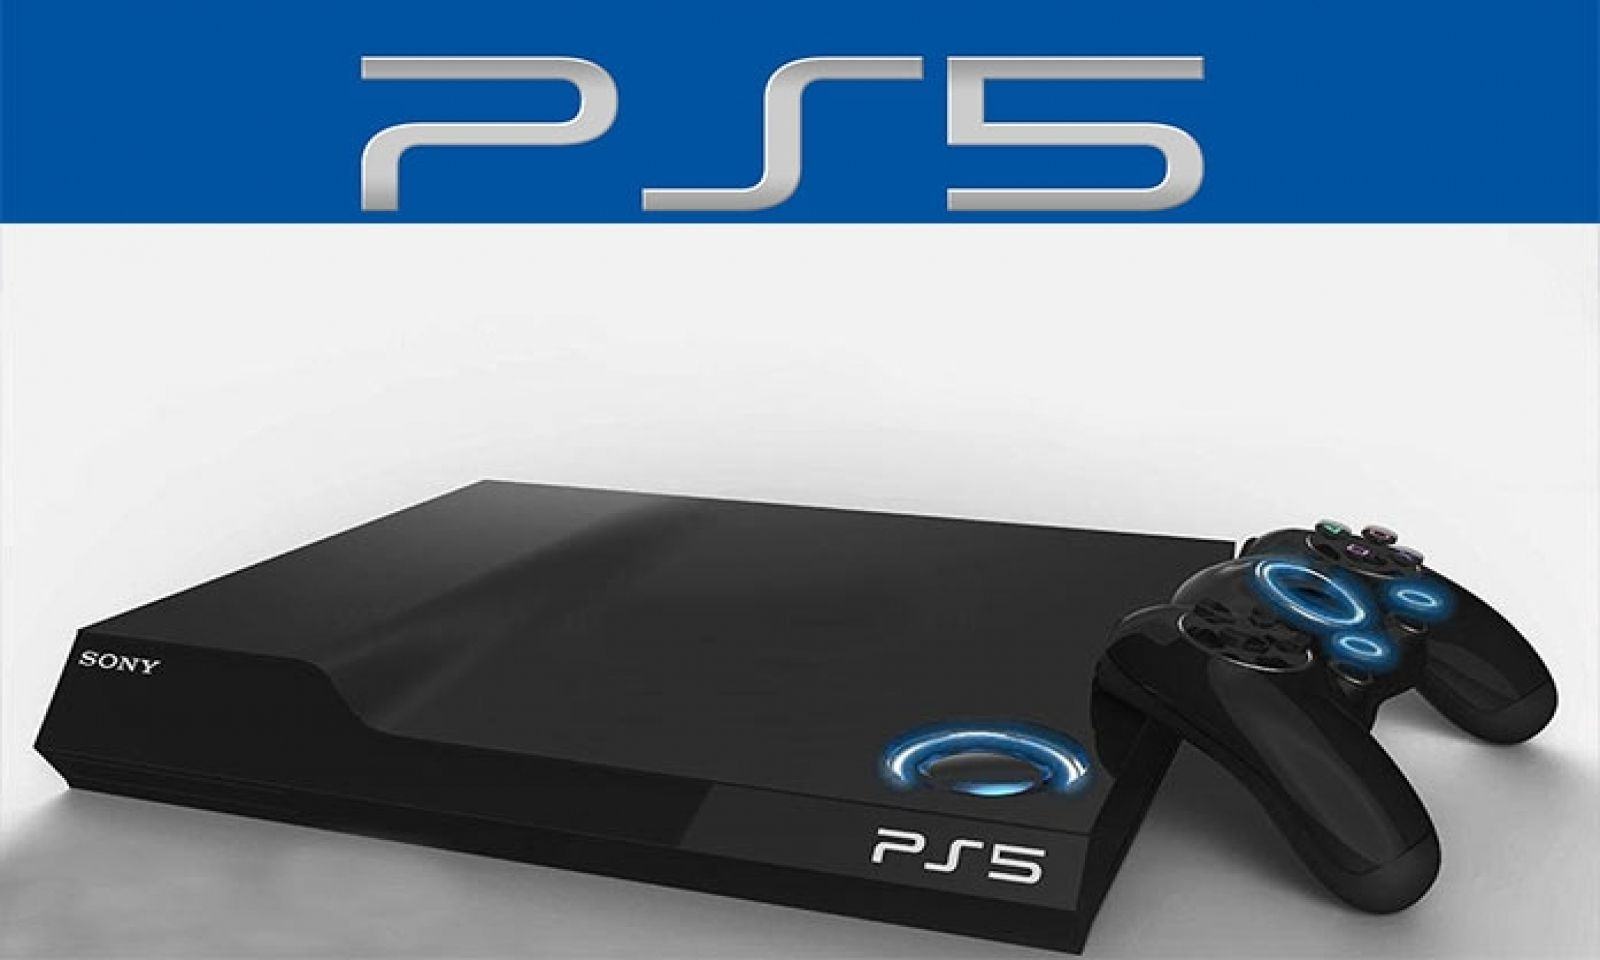 PlayStation 5 rumors